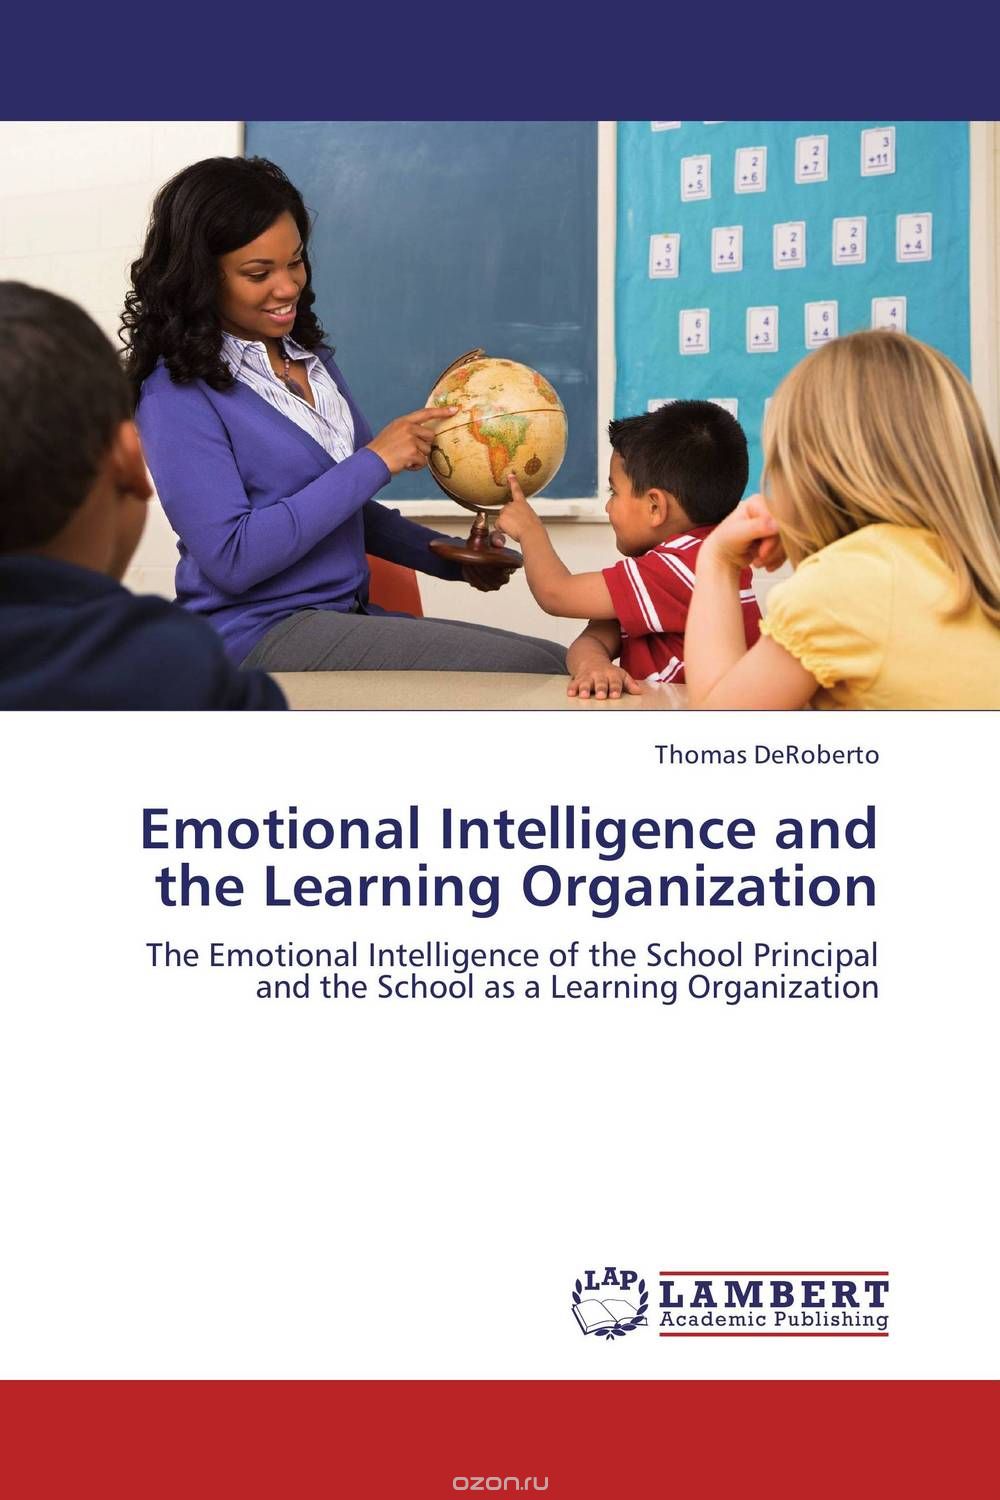 Скачать книгу "Emotional Intelligence and the Learning Organization"